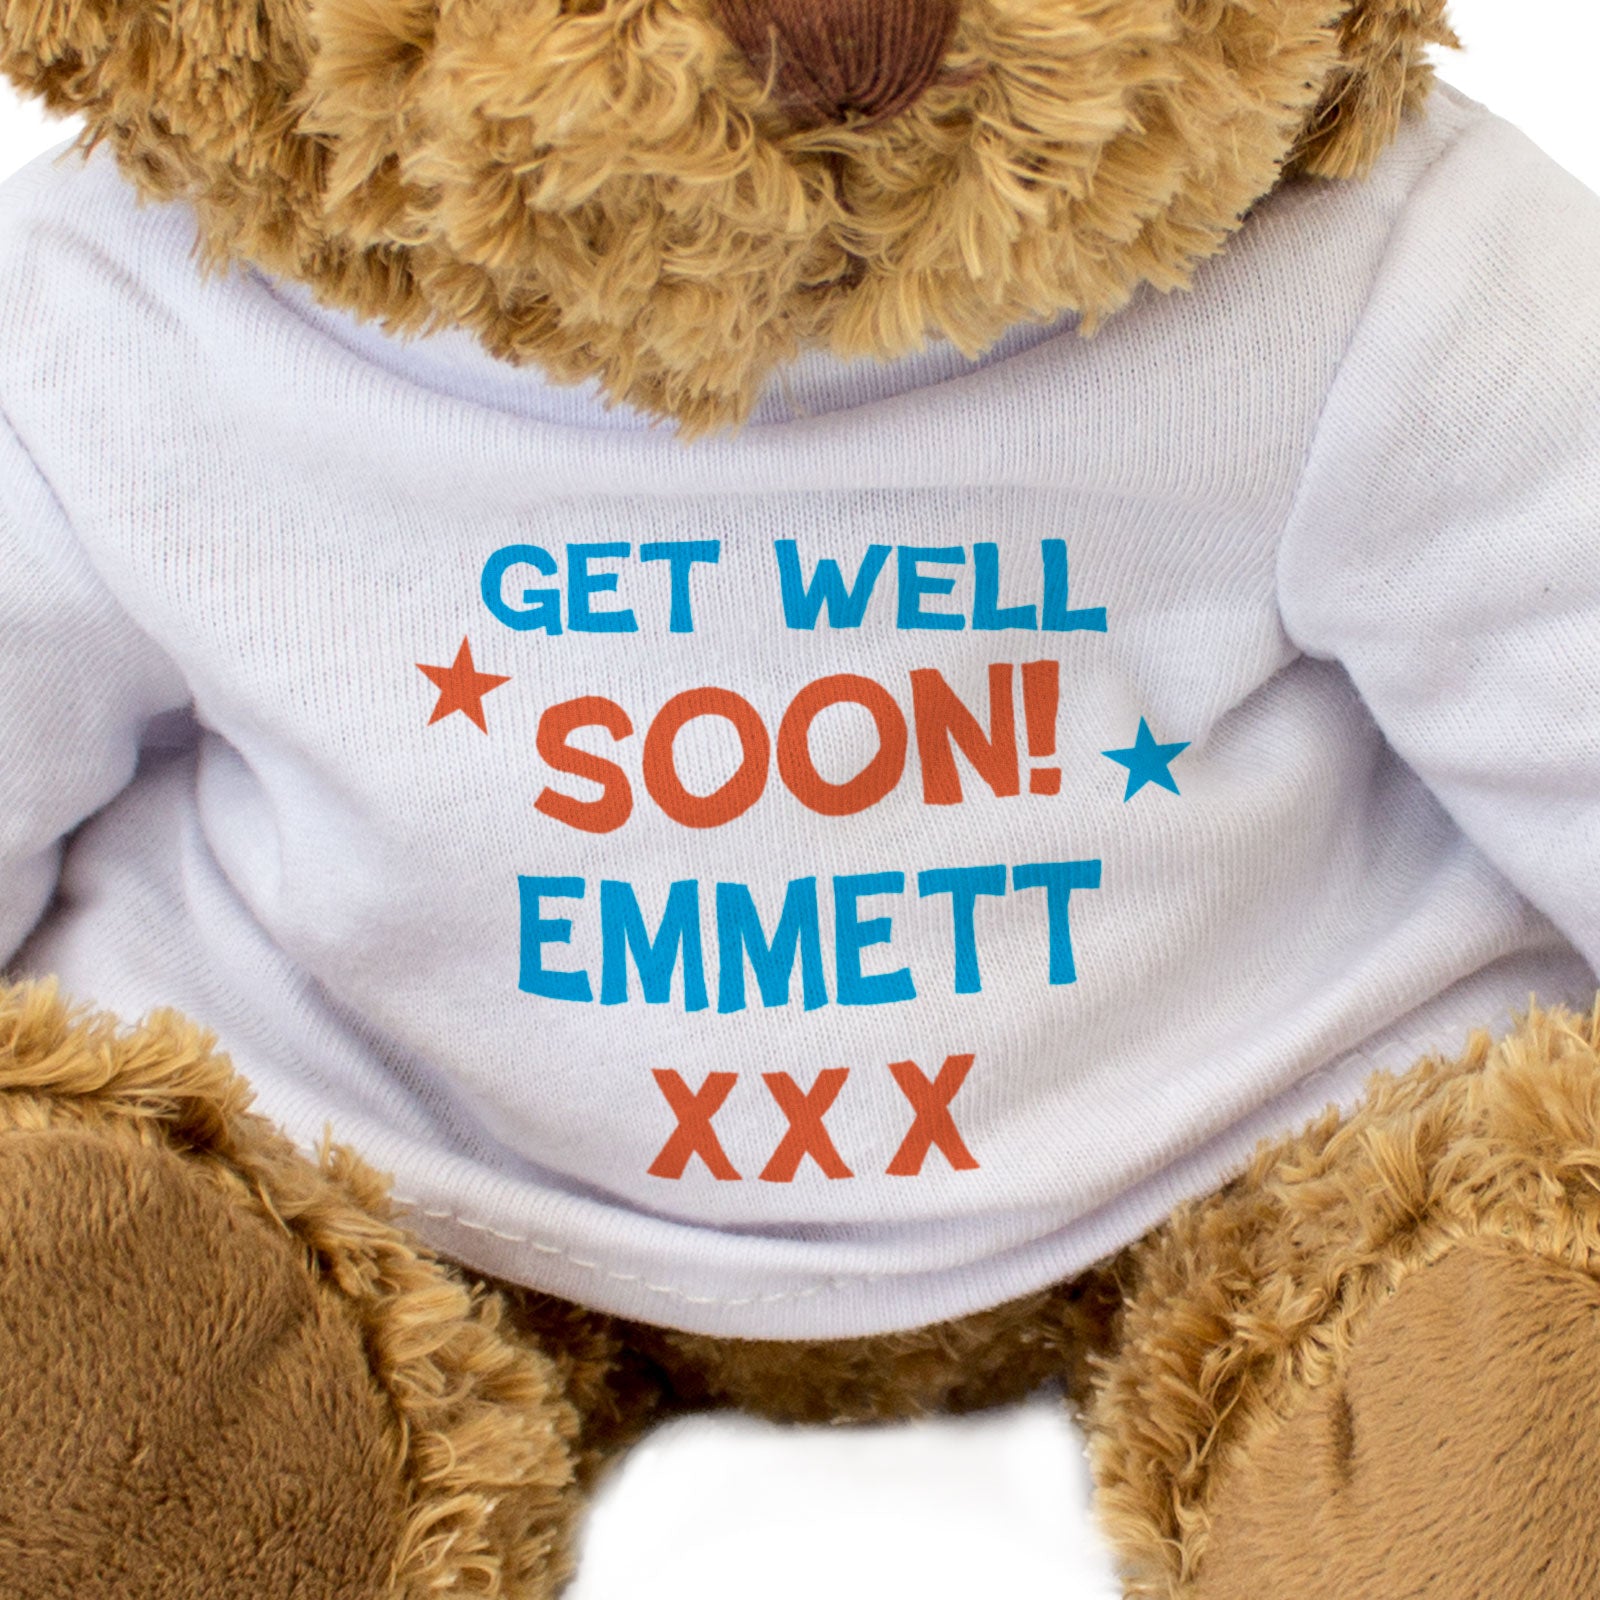 Get Well Soon Emmett - Teddy Bear